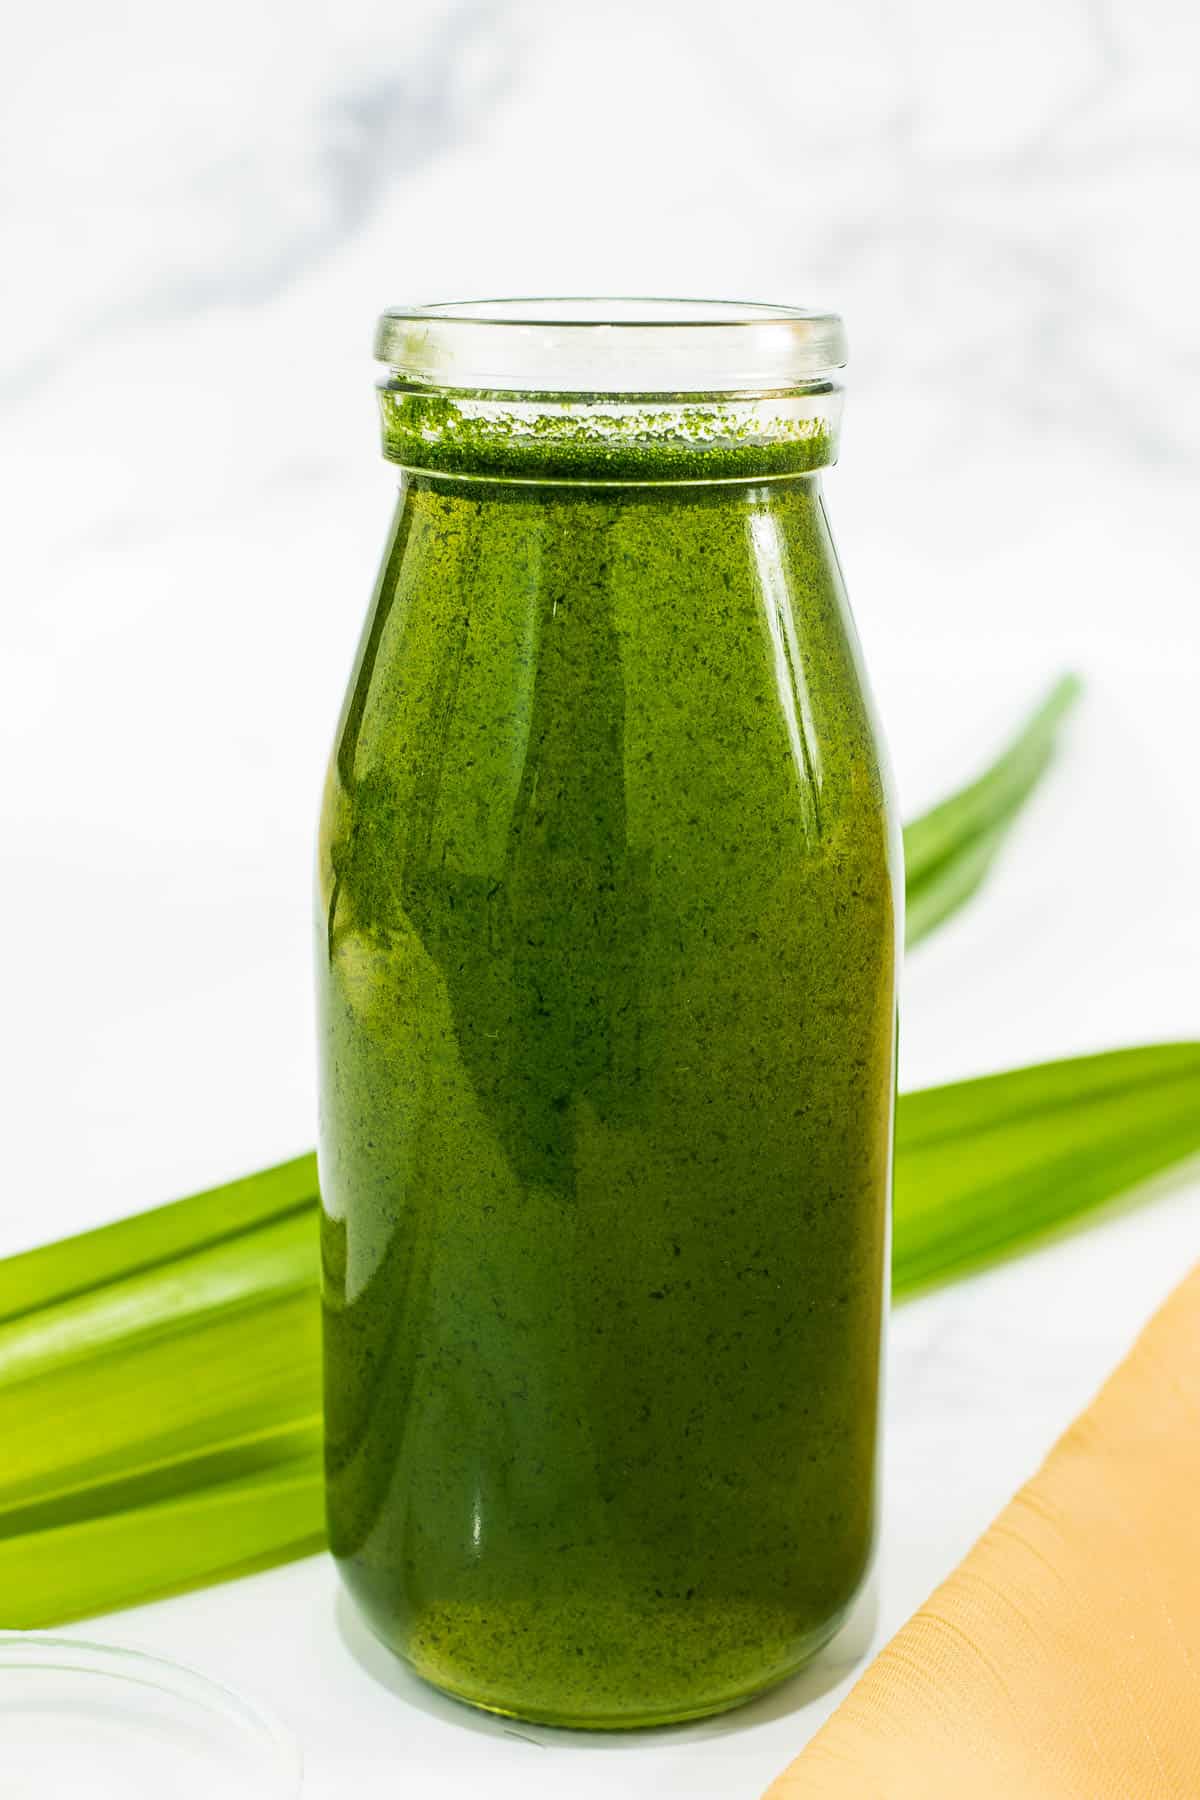 A bottle of green pandan syrup